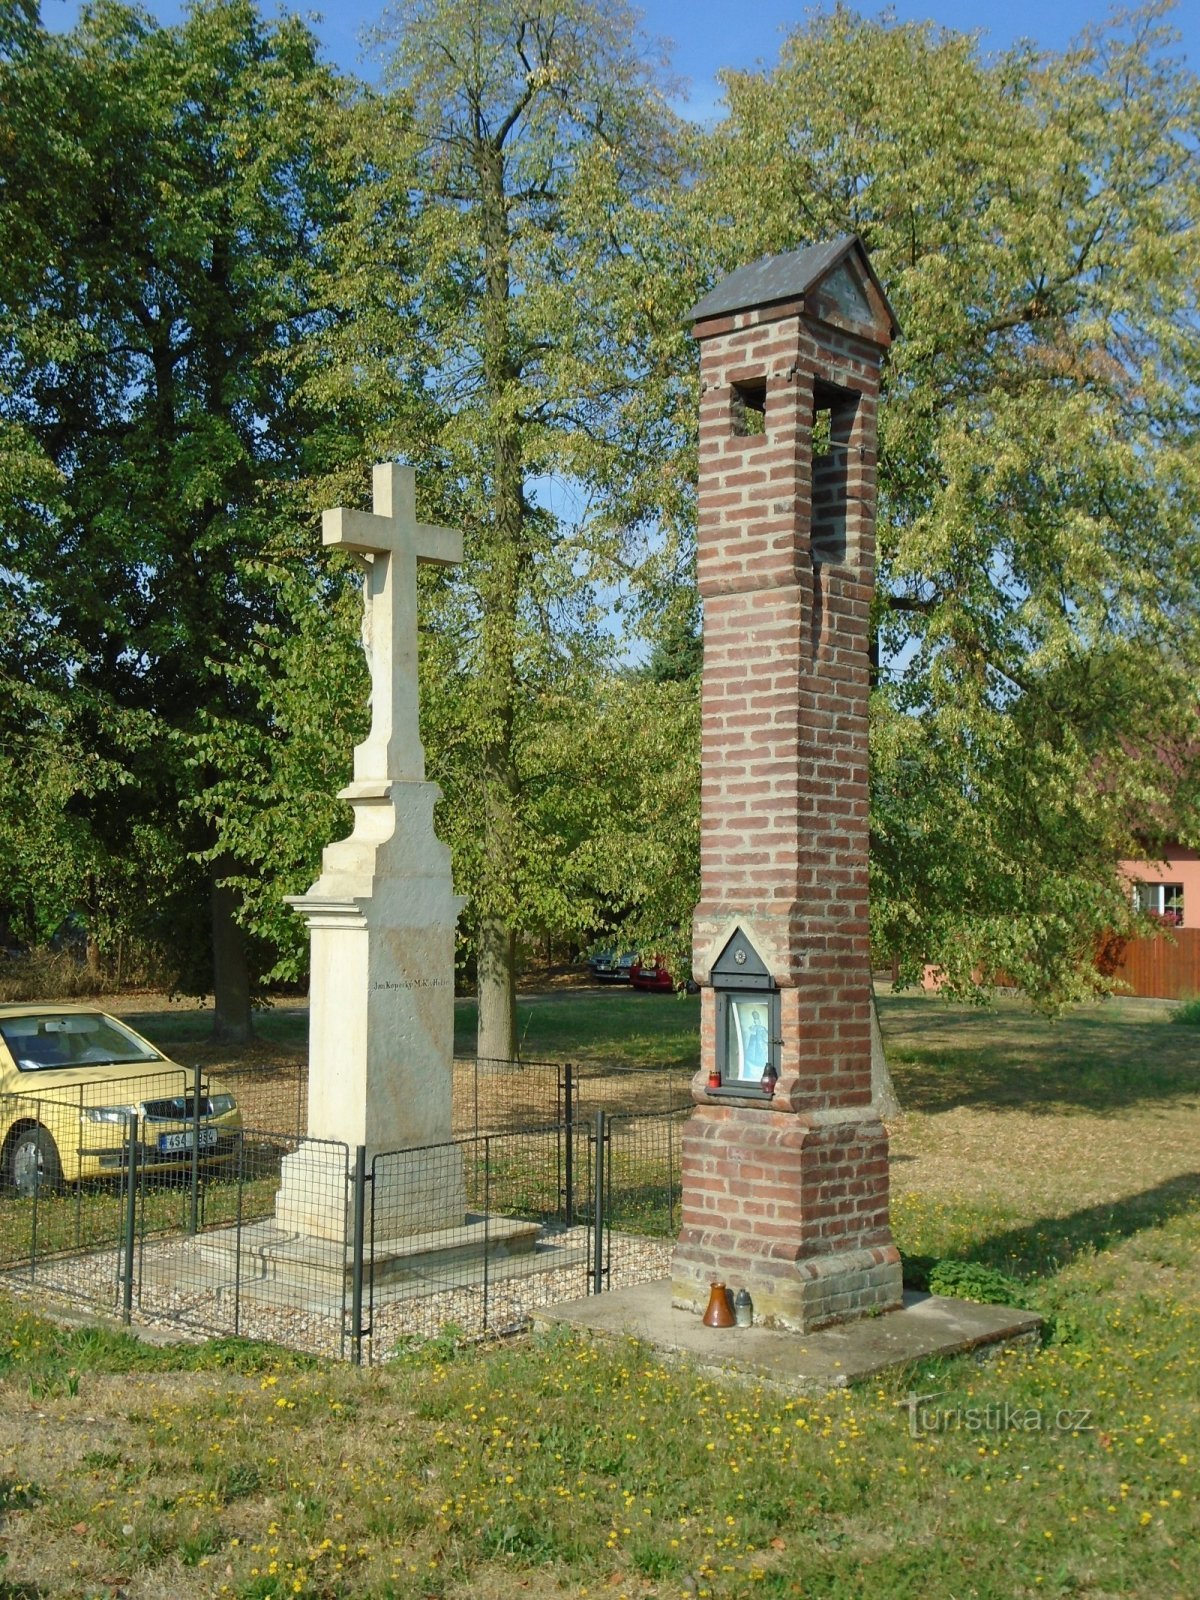 Croce e campanile (Trnava, 19.8.2018)